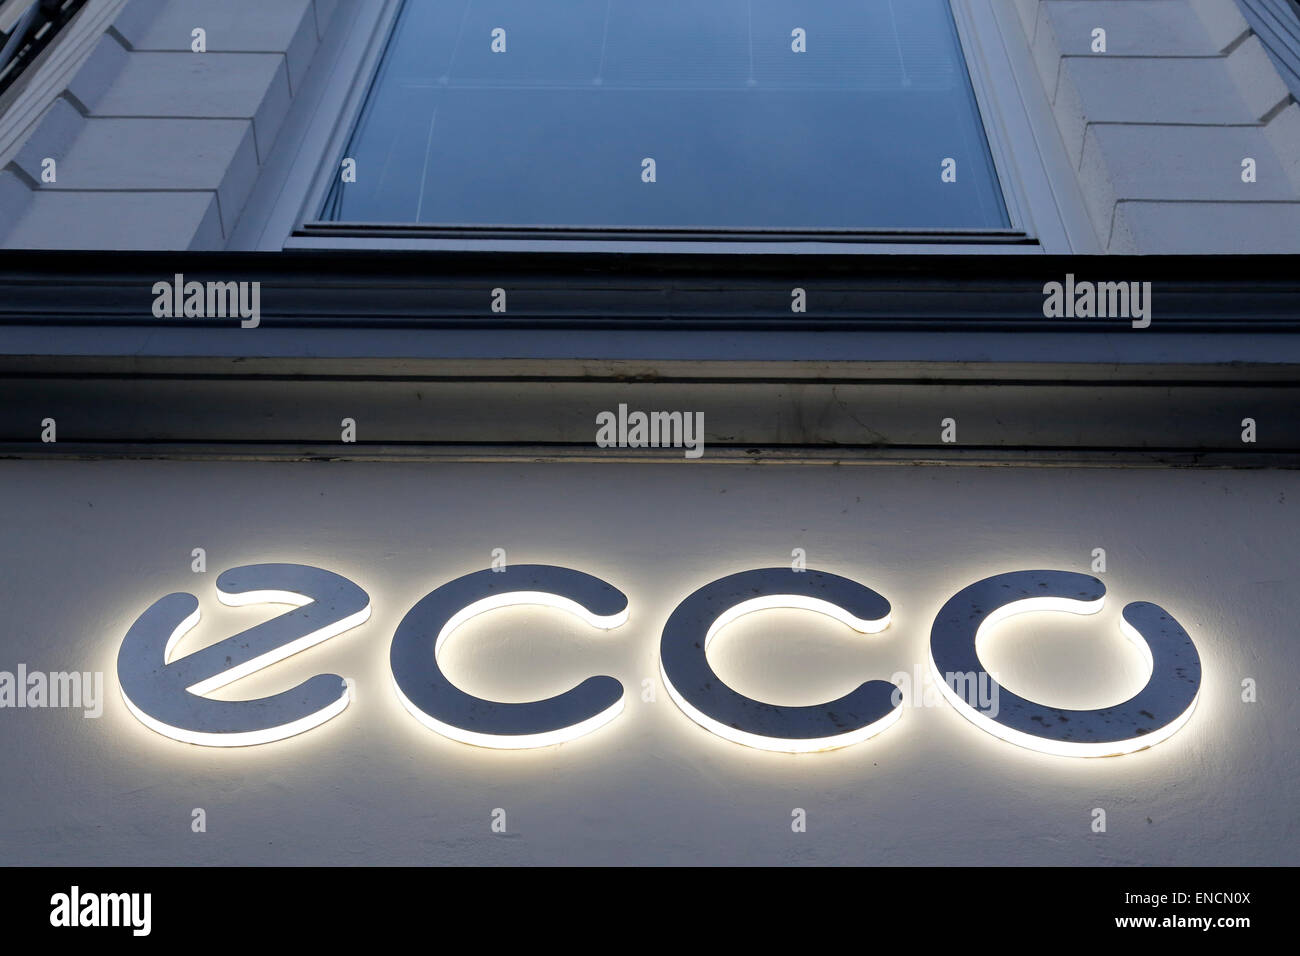 Ecco shop sign, Copenhagen, Denmark Stock Photo - Alamy